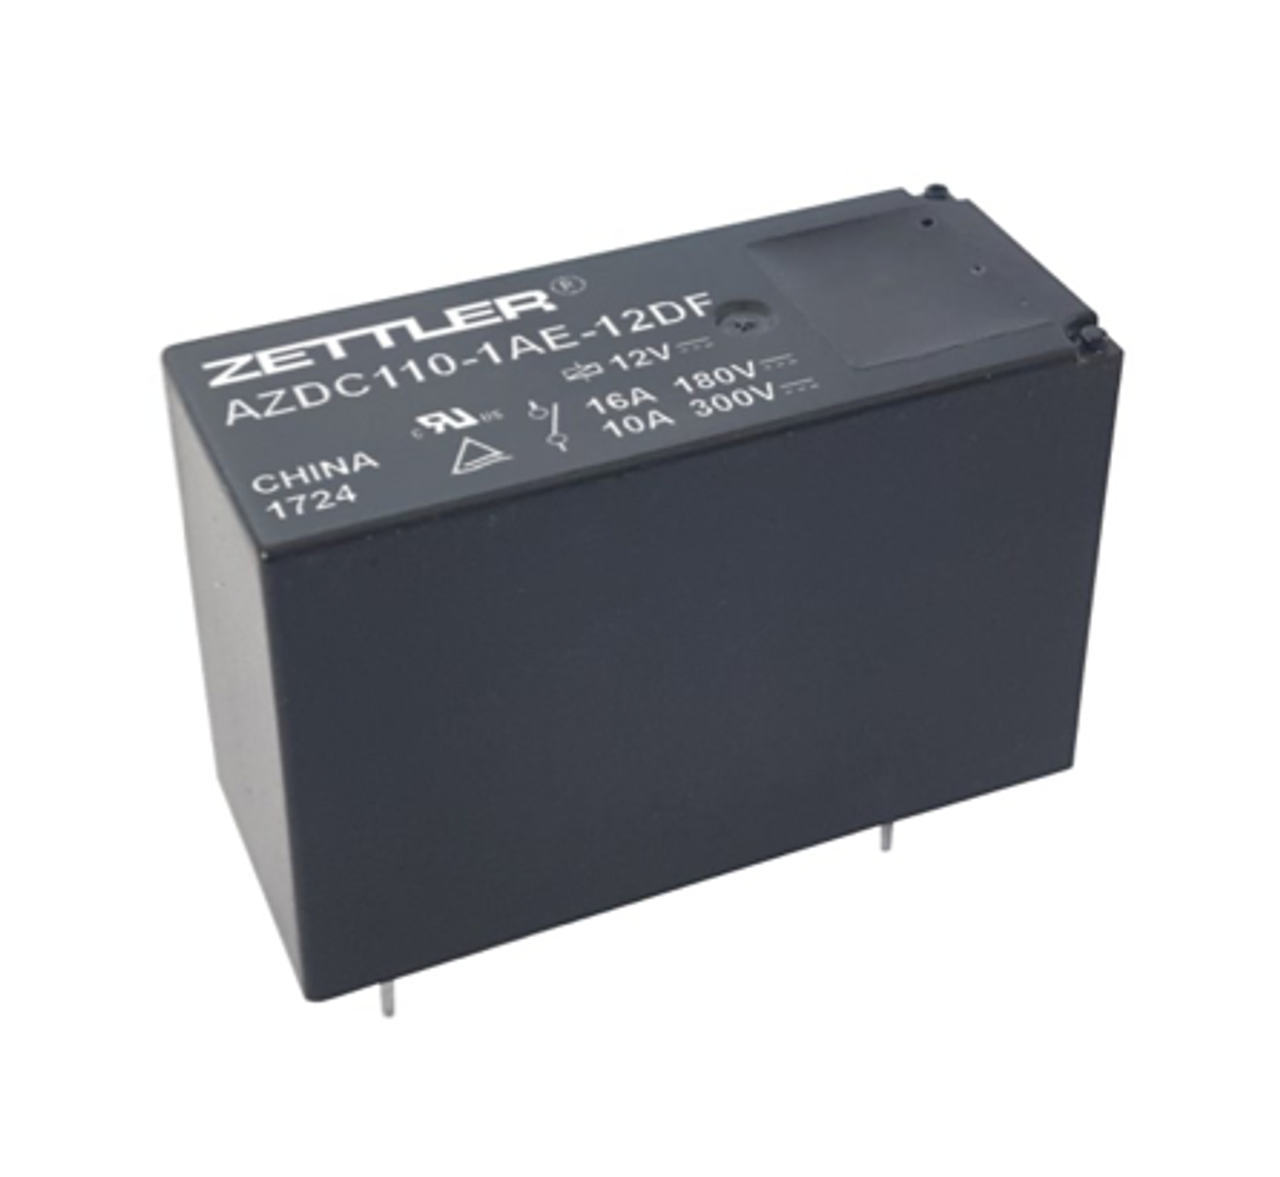 American Zettler AZDC110-1AE-5DF Power Relay